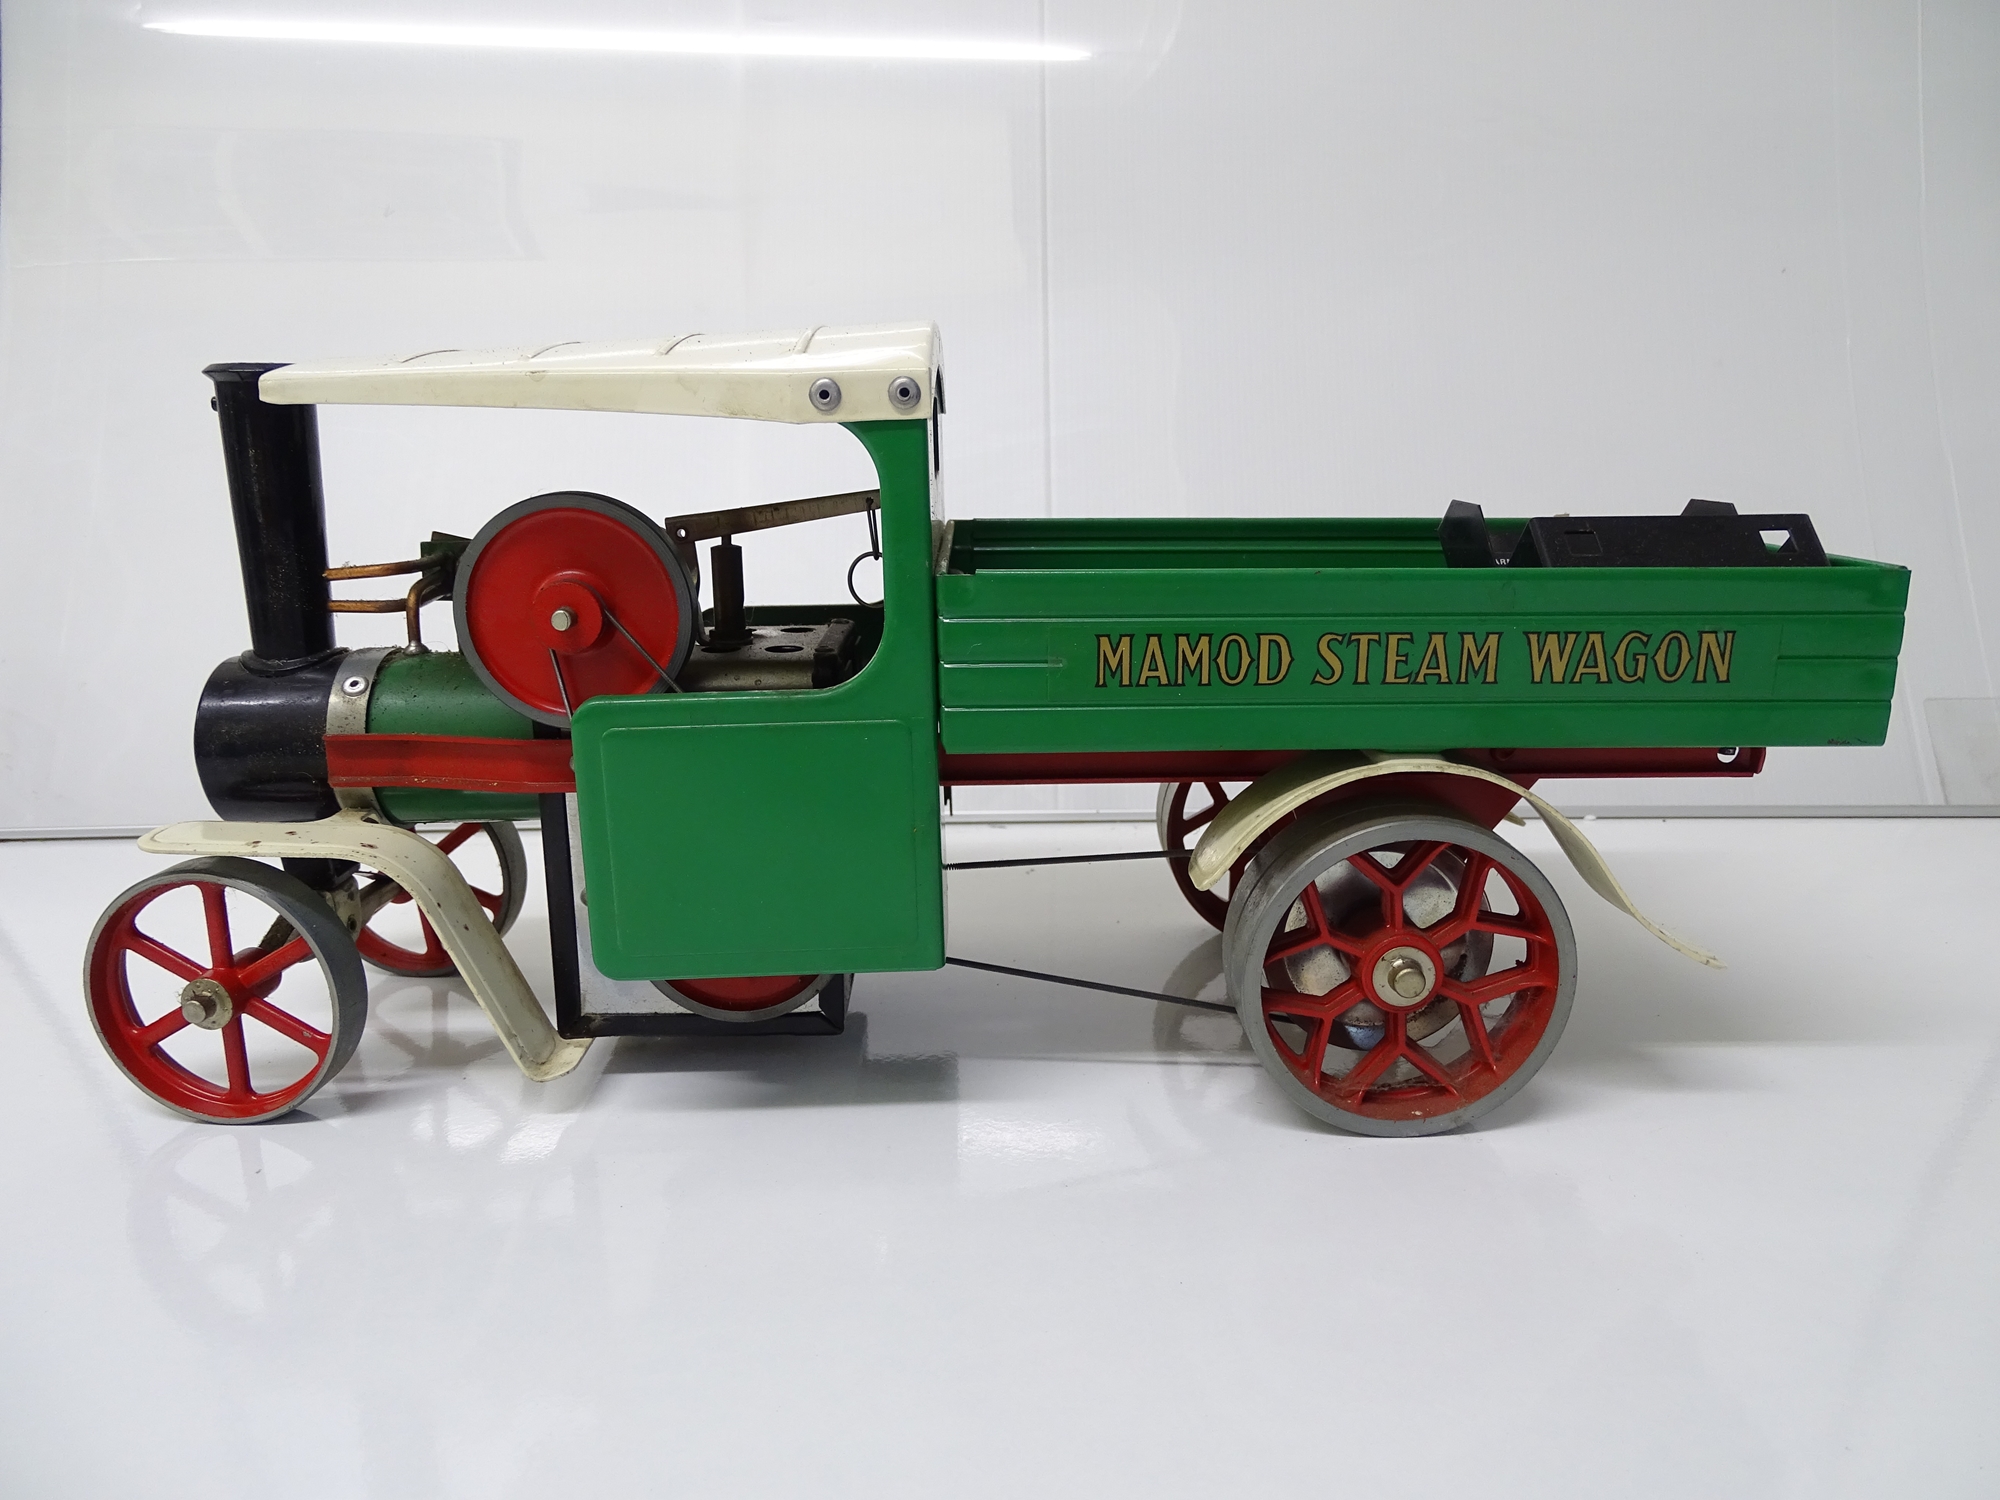 VINTAGE TOYS: A MAMOD live steam wagon in original